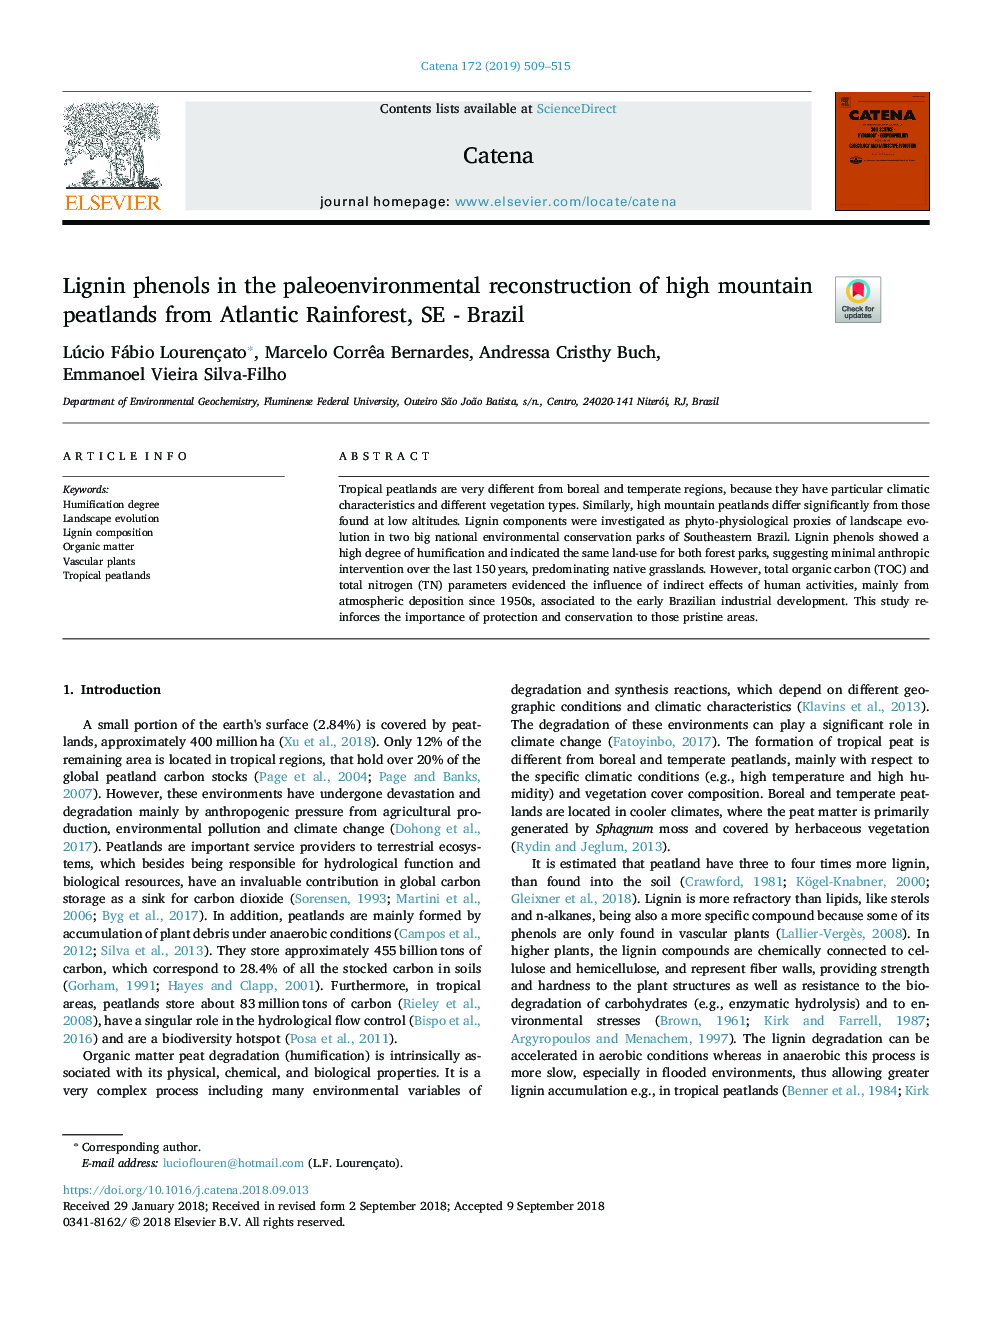 Lignin phenols in the paleoenvironmental reconstruction of high mountain peatlands from Atlantic Rainforest, SE - Brazil